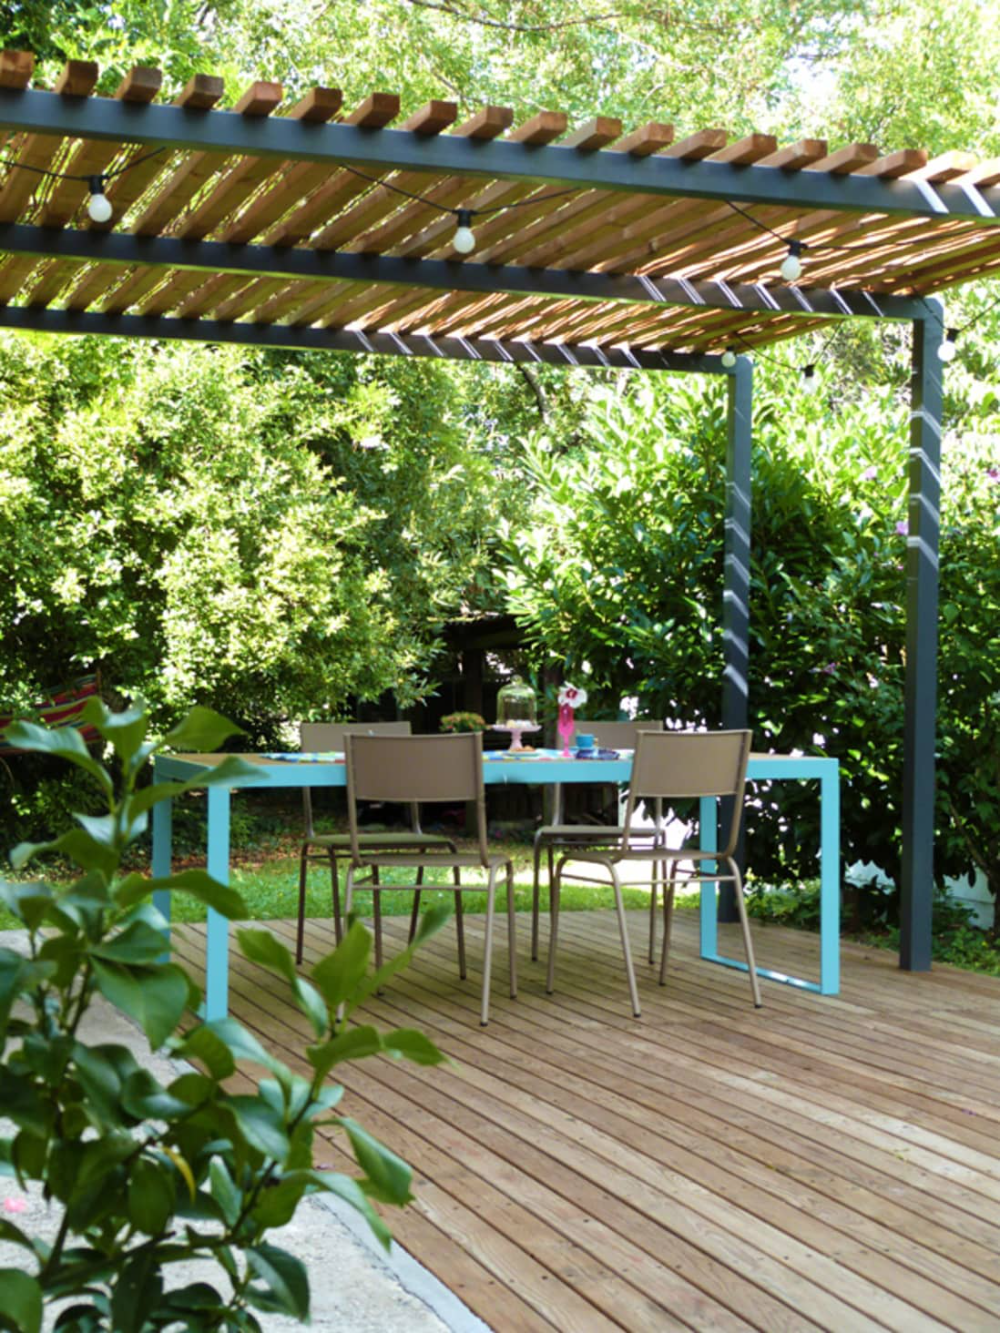 Stylish Outdoor Shade: The Pergola with Canopy